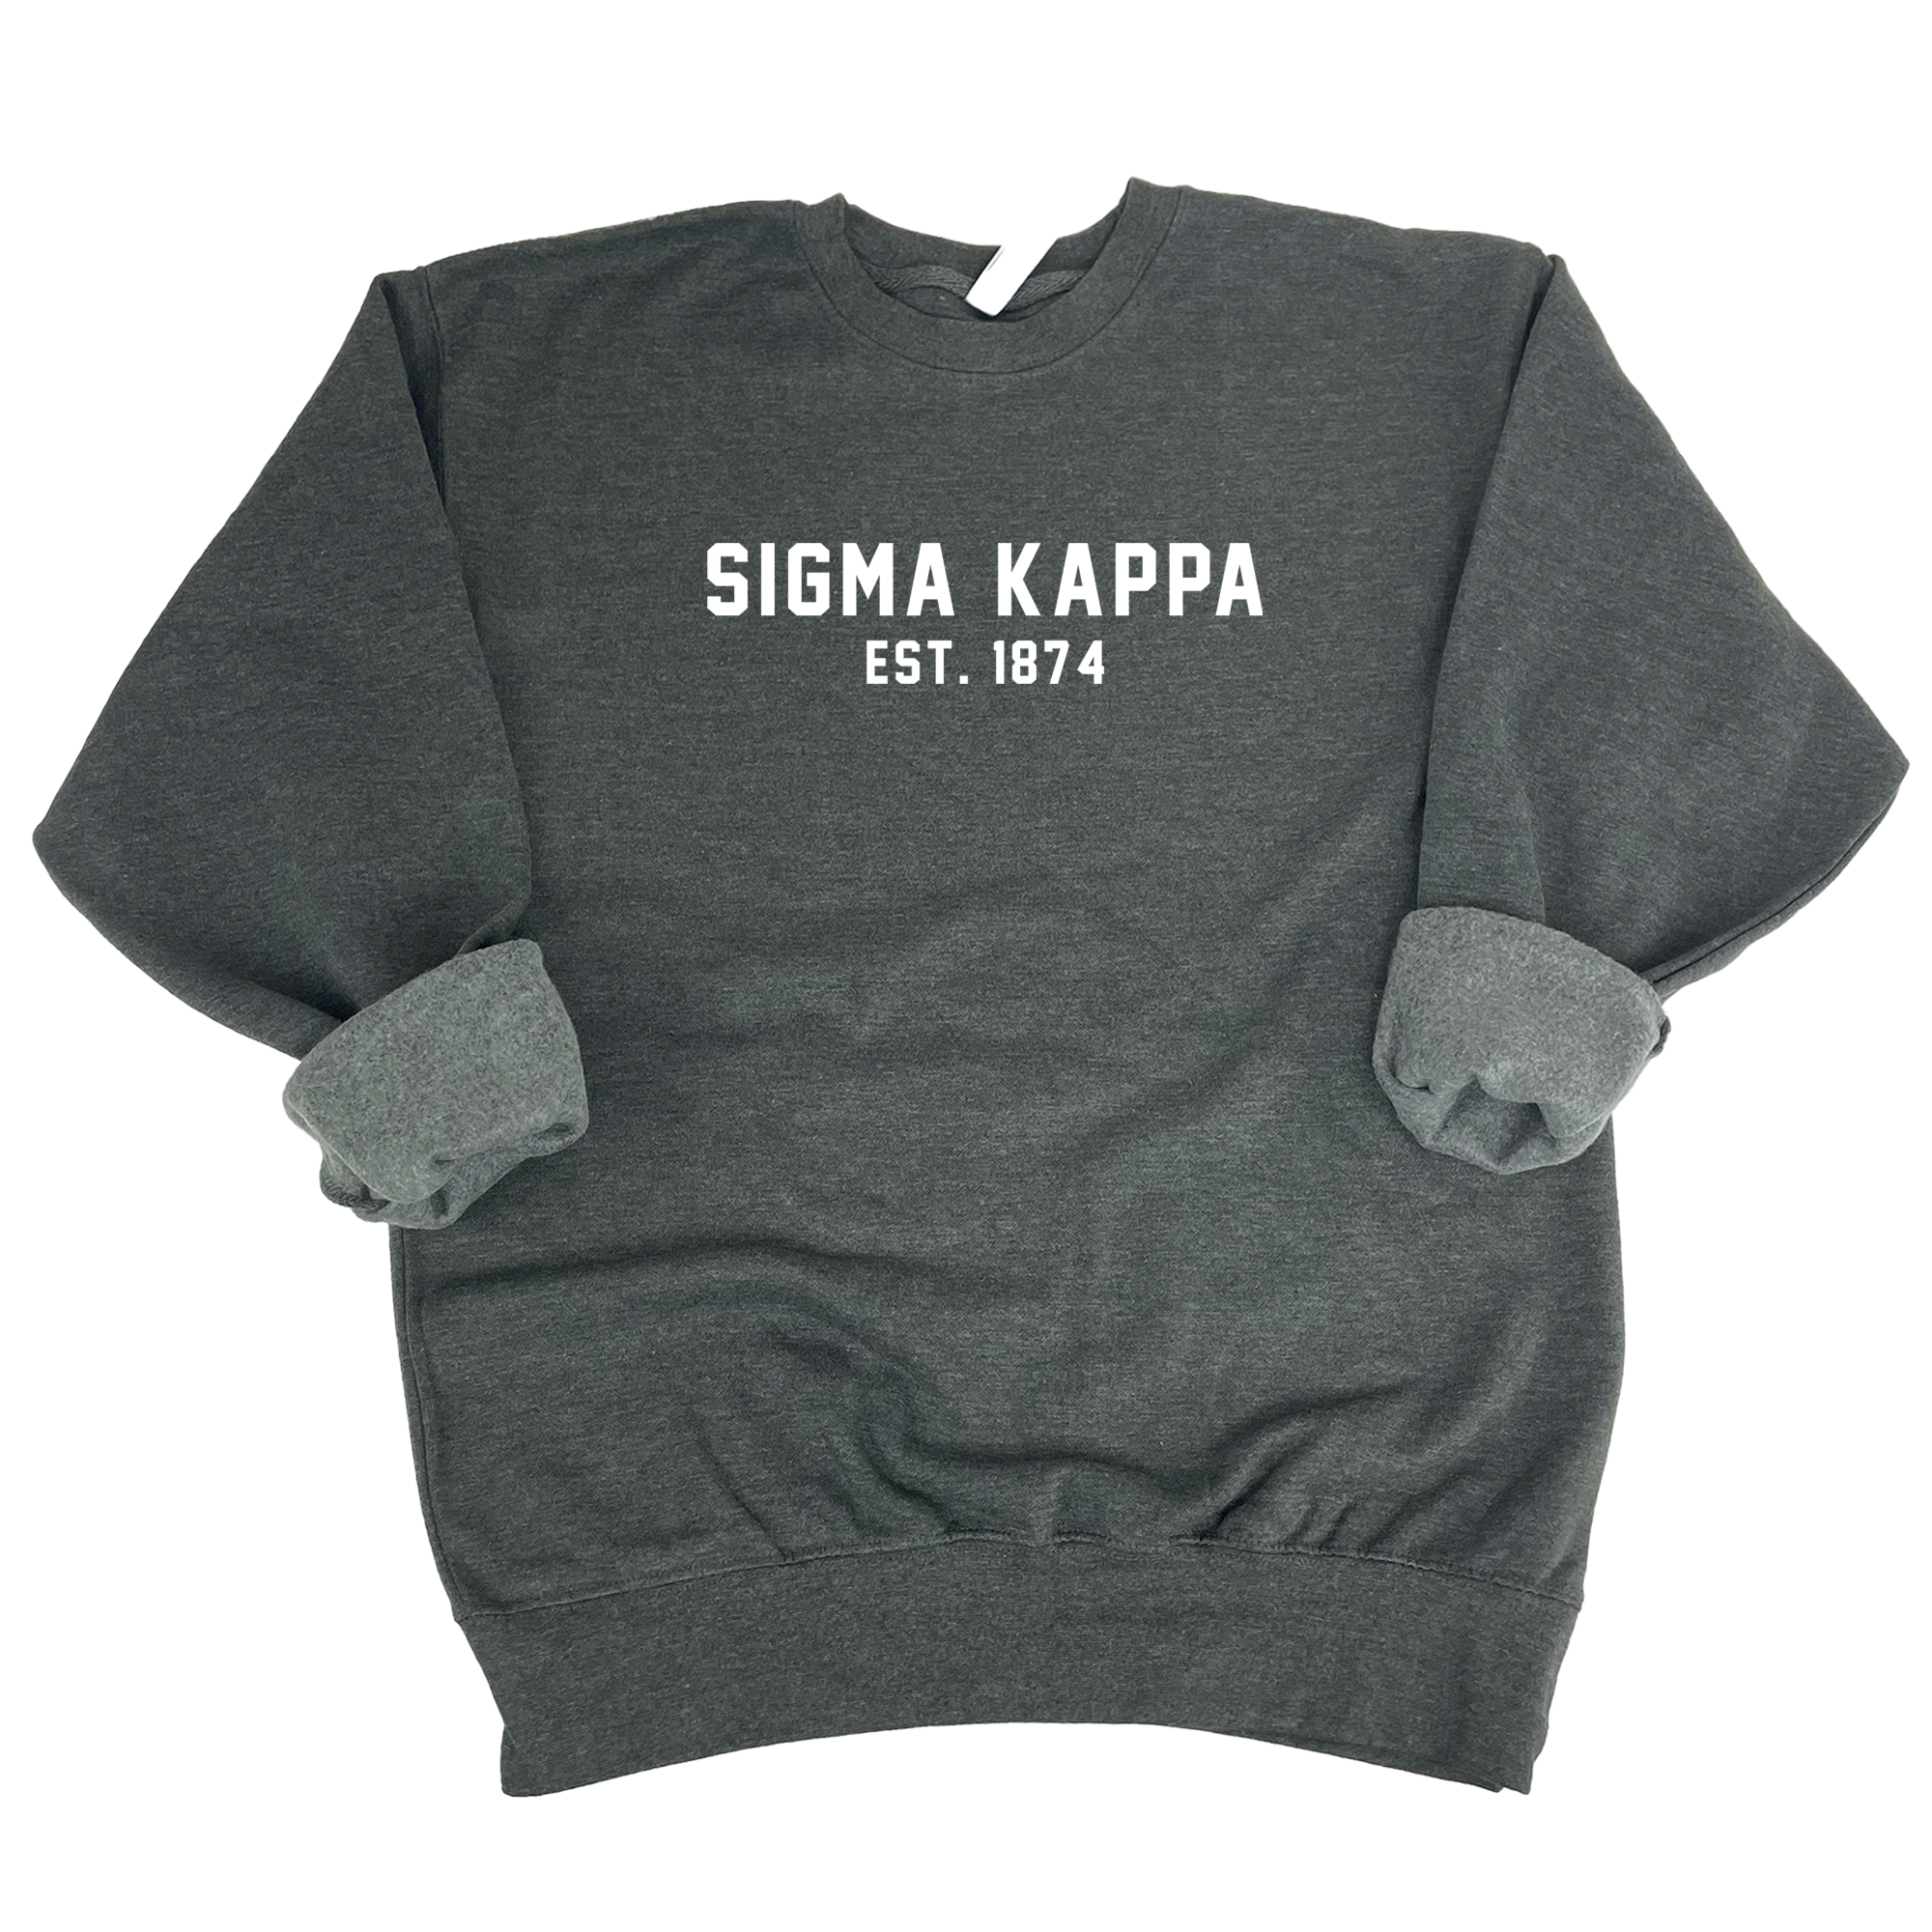 Sigma Kappa Chic 1874 Est. Sweatshirt Go Greek –